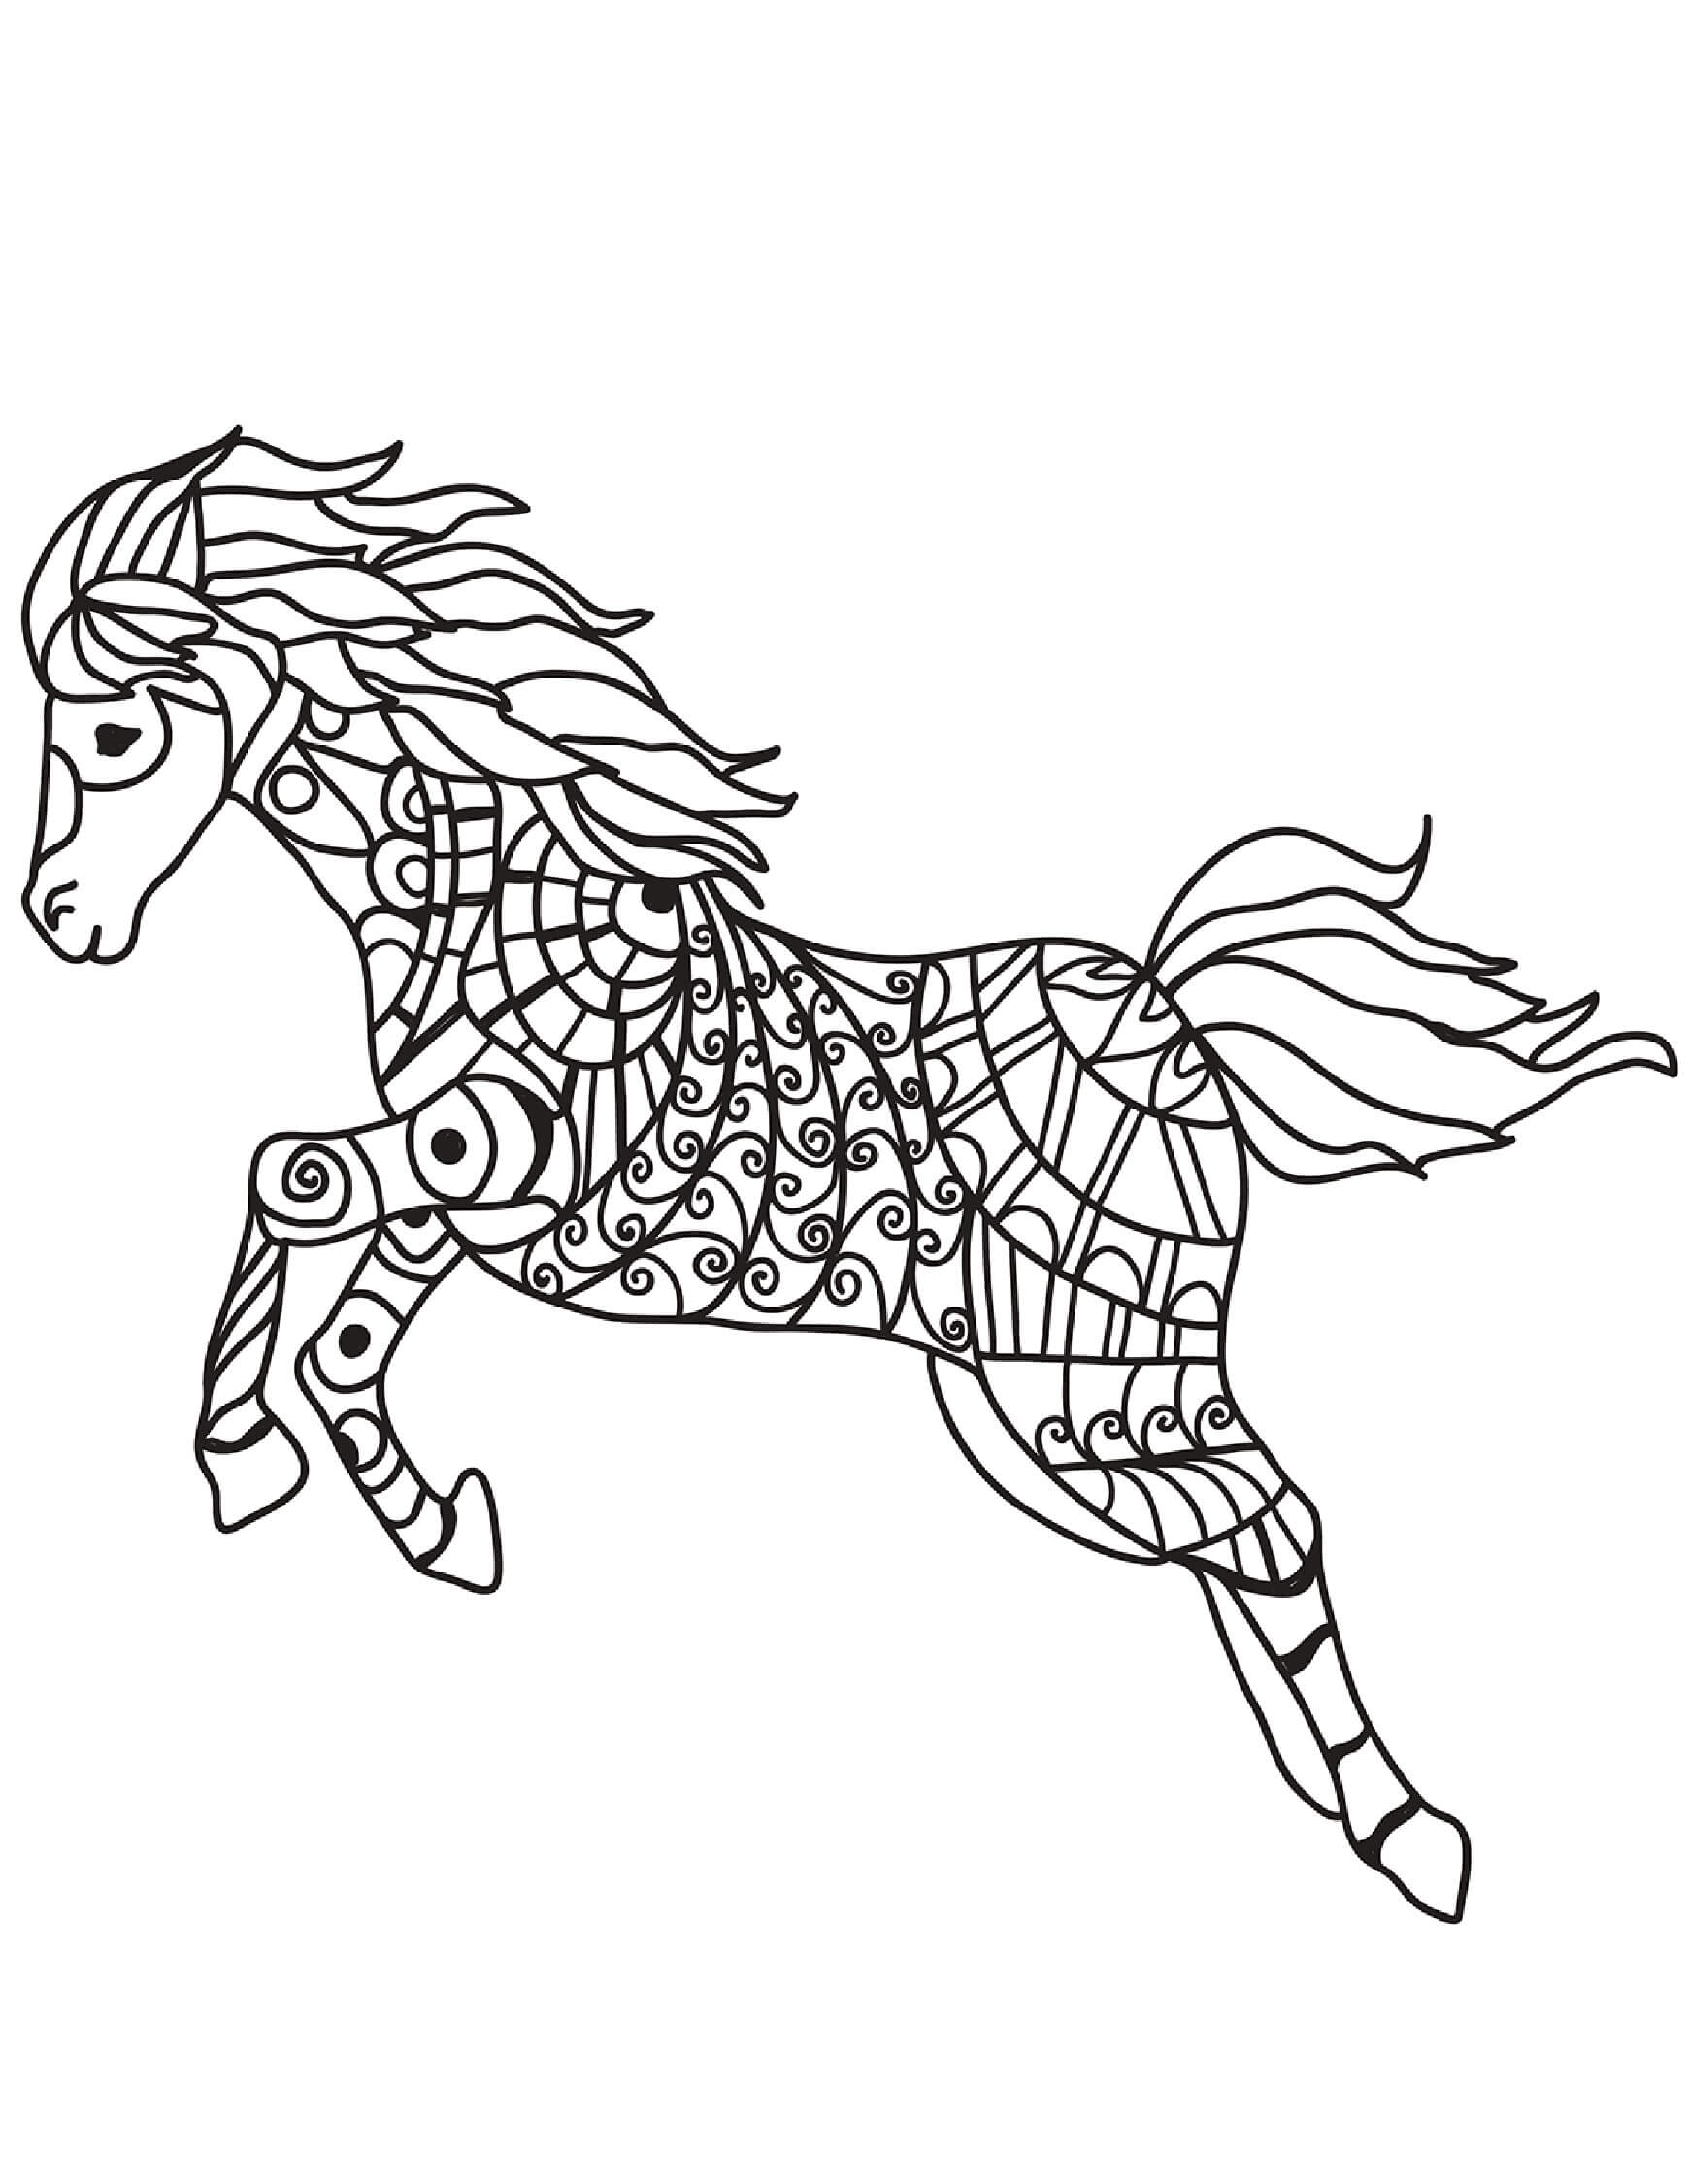 Mandala Horse Coloring Page – Sheet 16 Mandalas